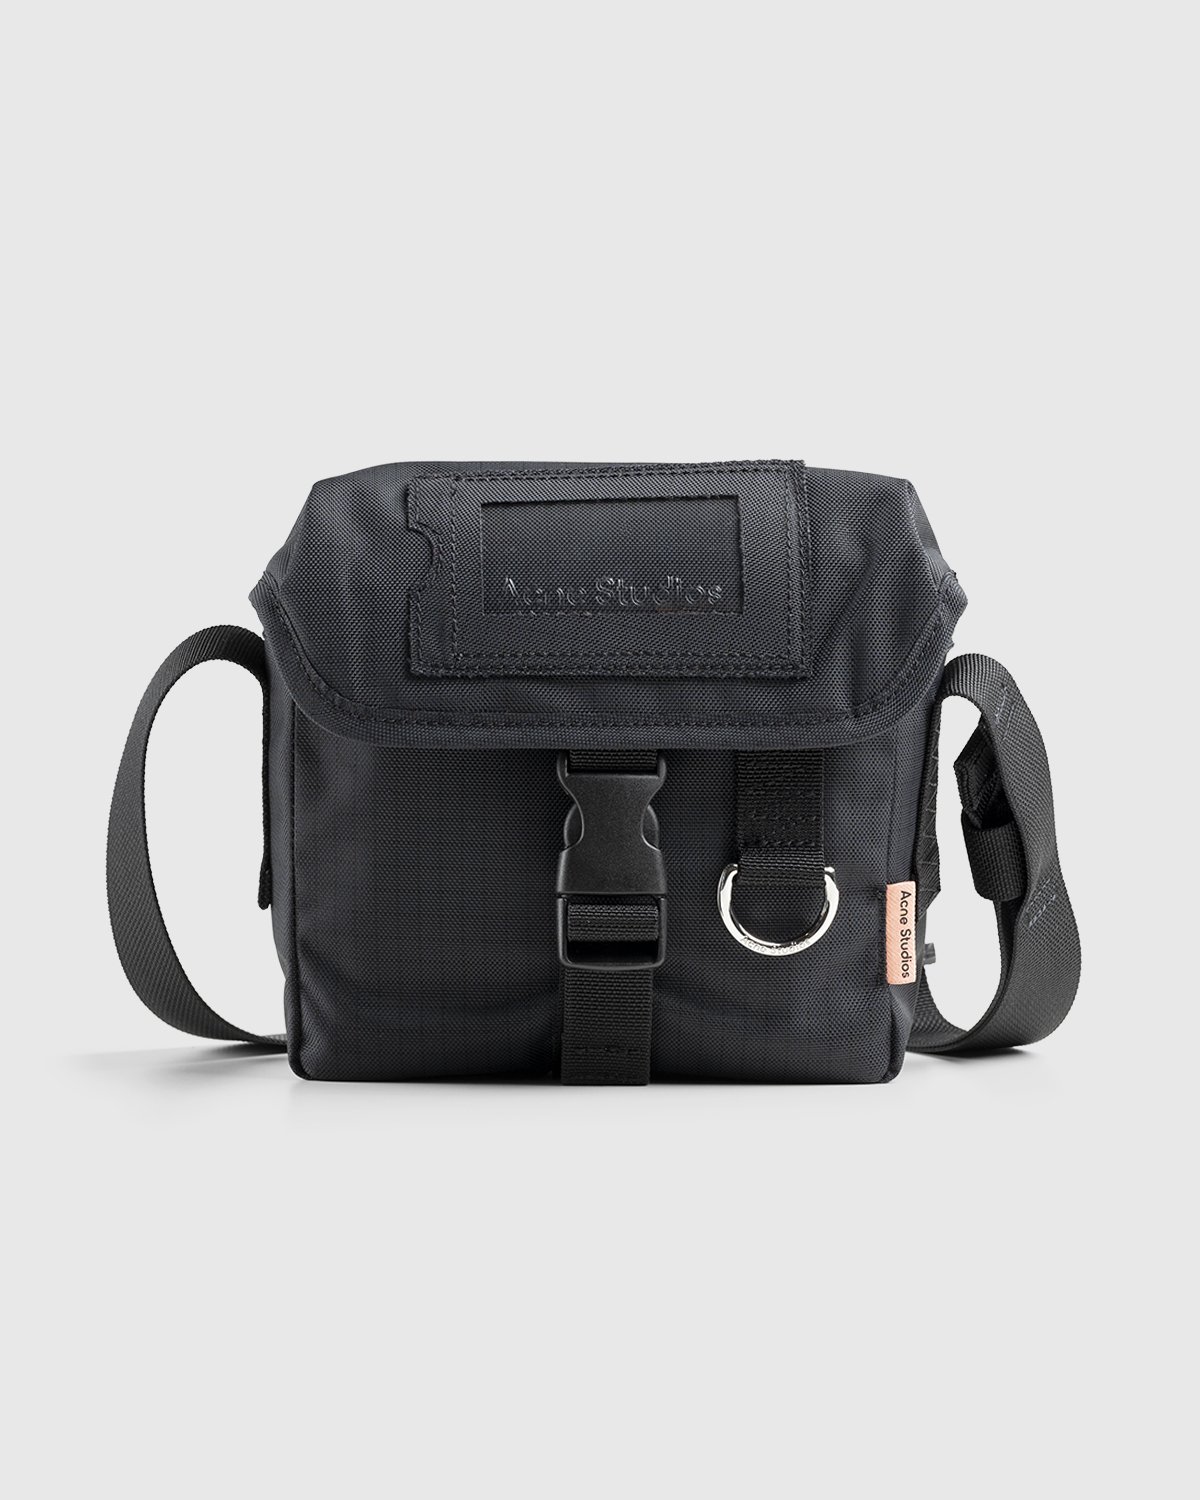 Acne Studios - Small Messenger Bag Black - Accessories - Black - Image 1